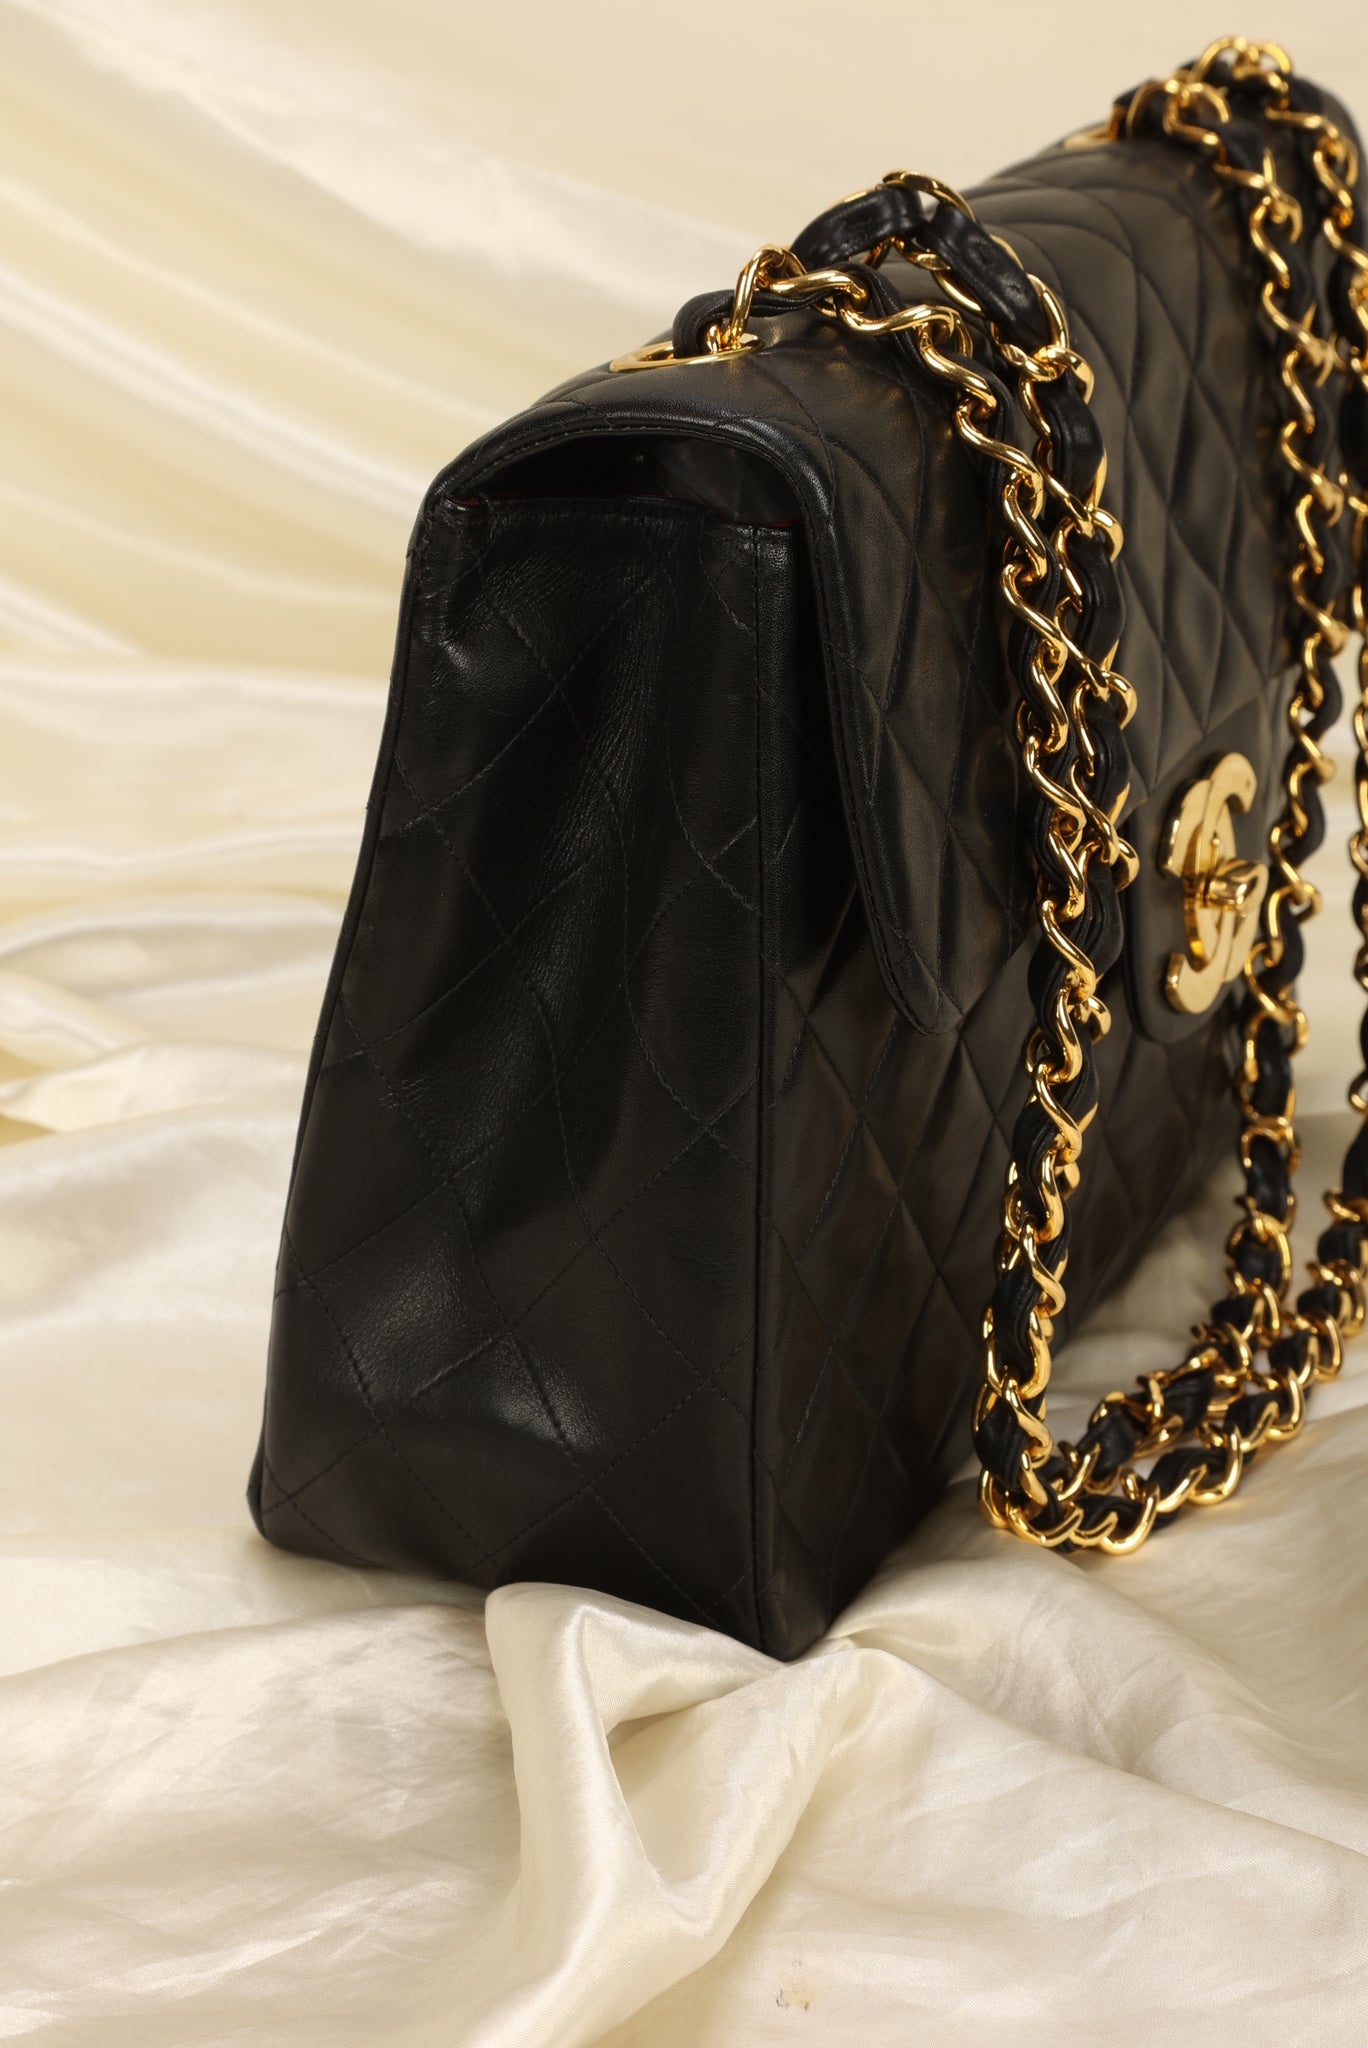 Chanel Maxi XL Logo Flap Bag